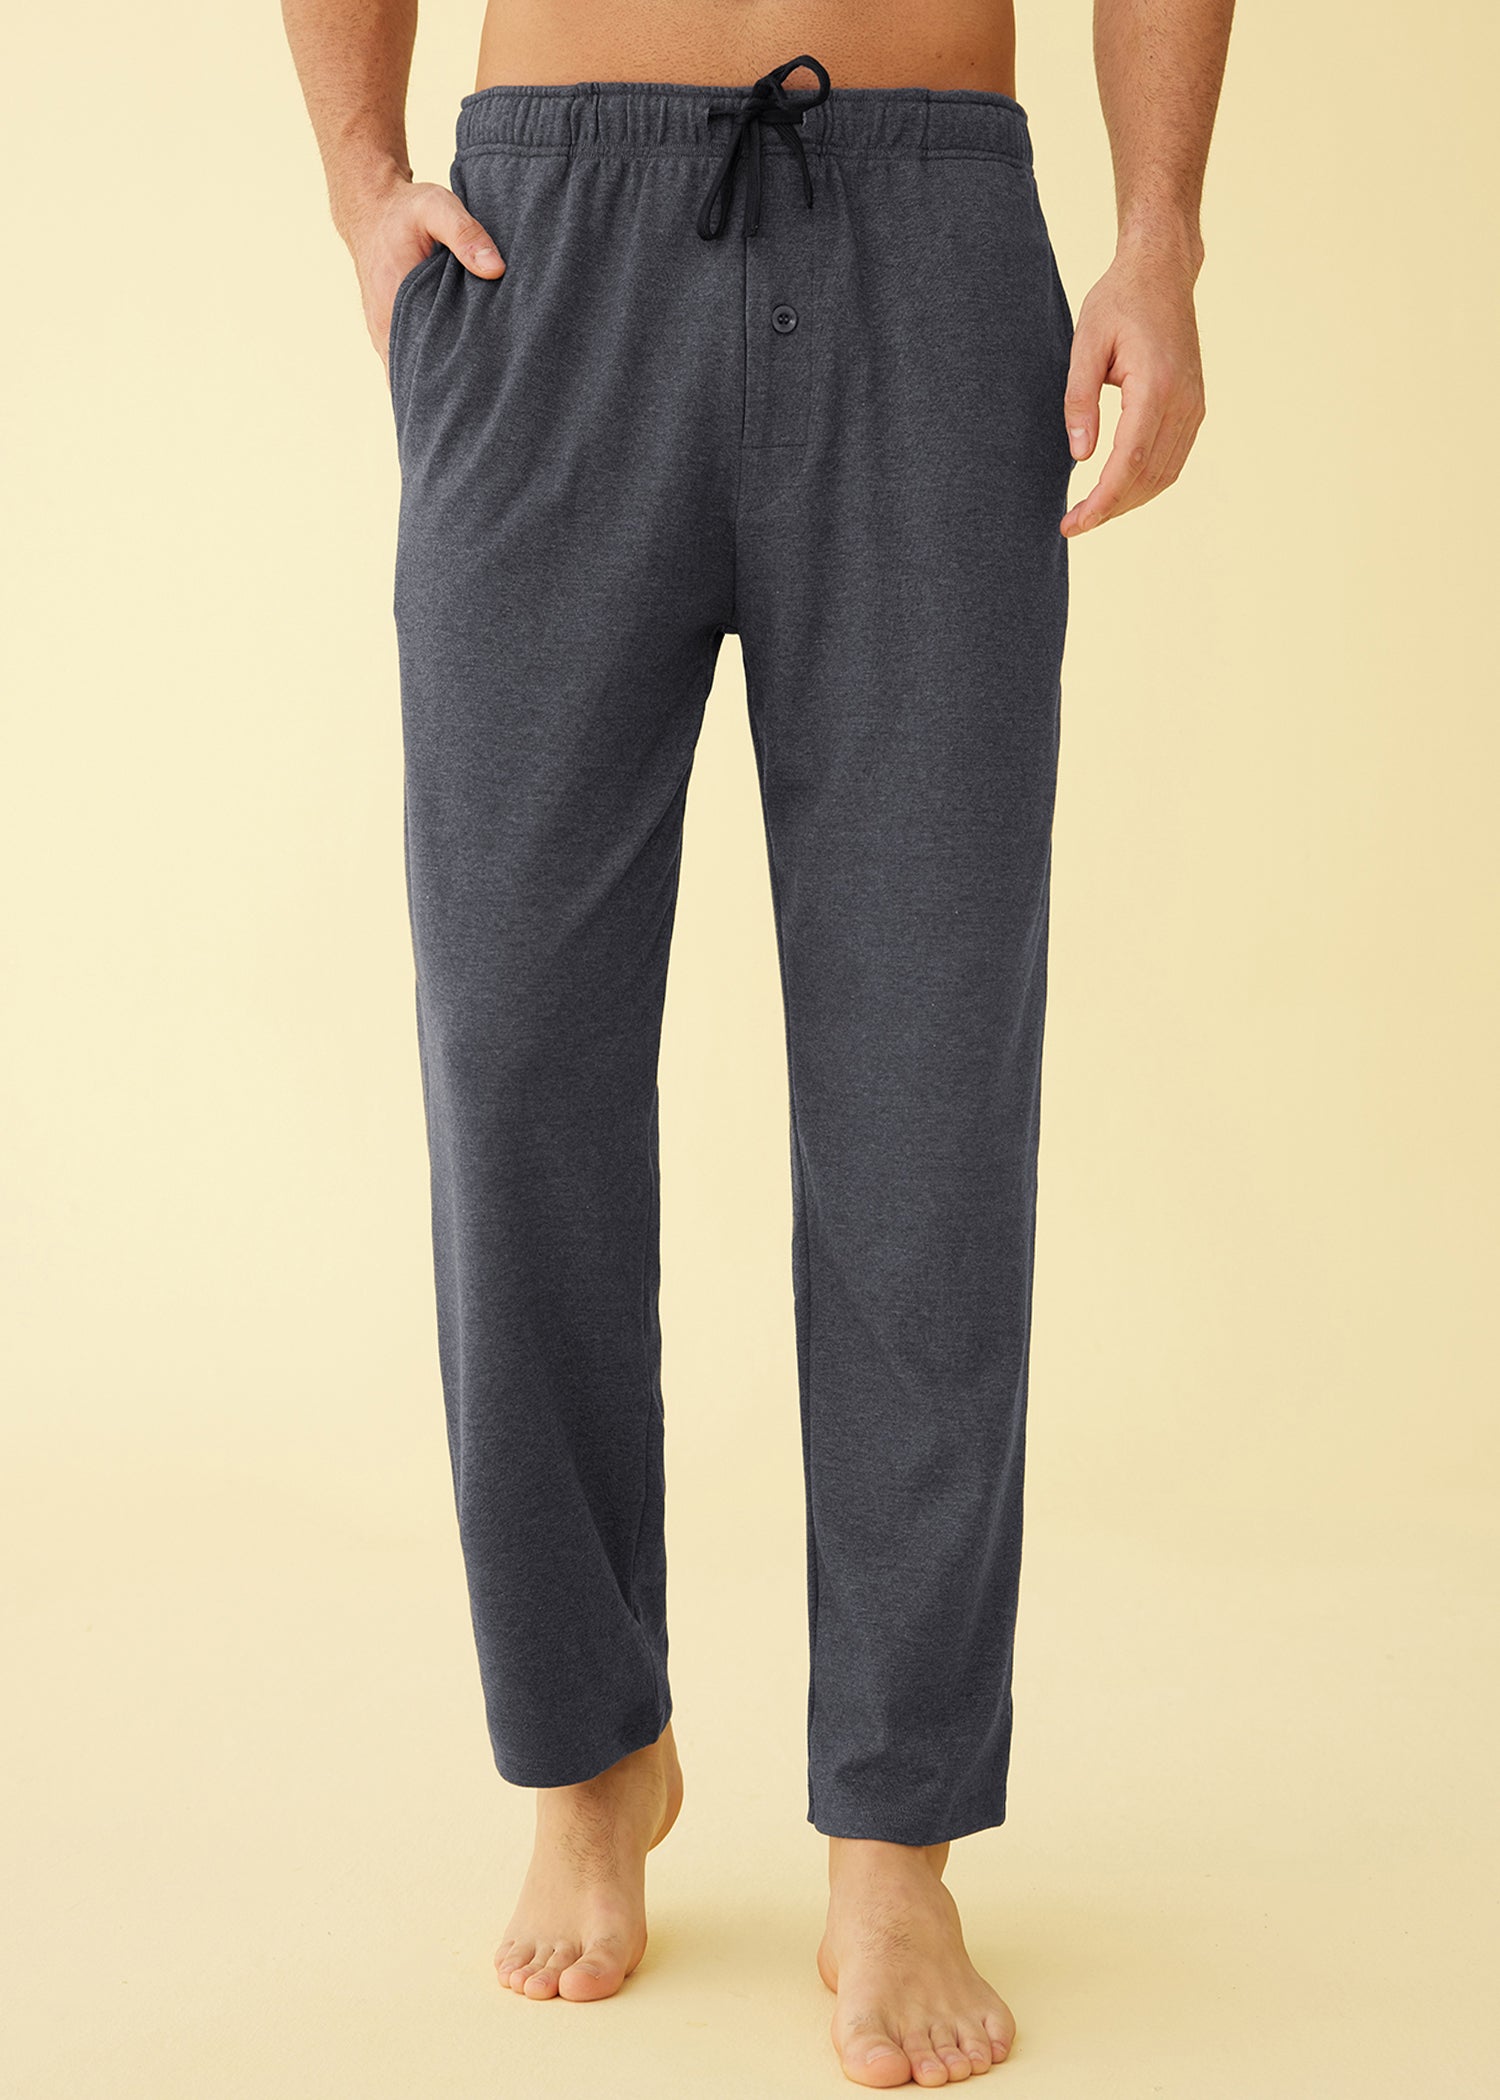 Men's Warm Pajama Pants Comfy Lounge Pants with Pockets – Latuza